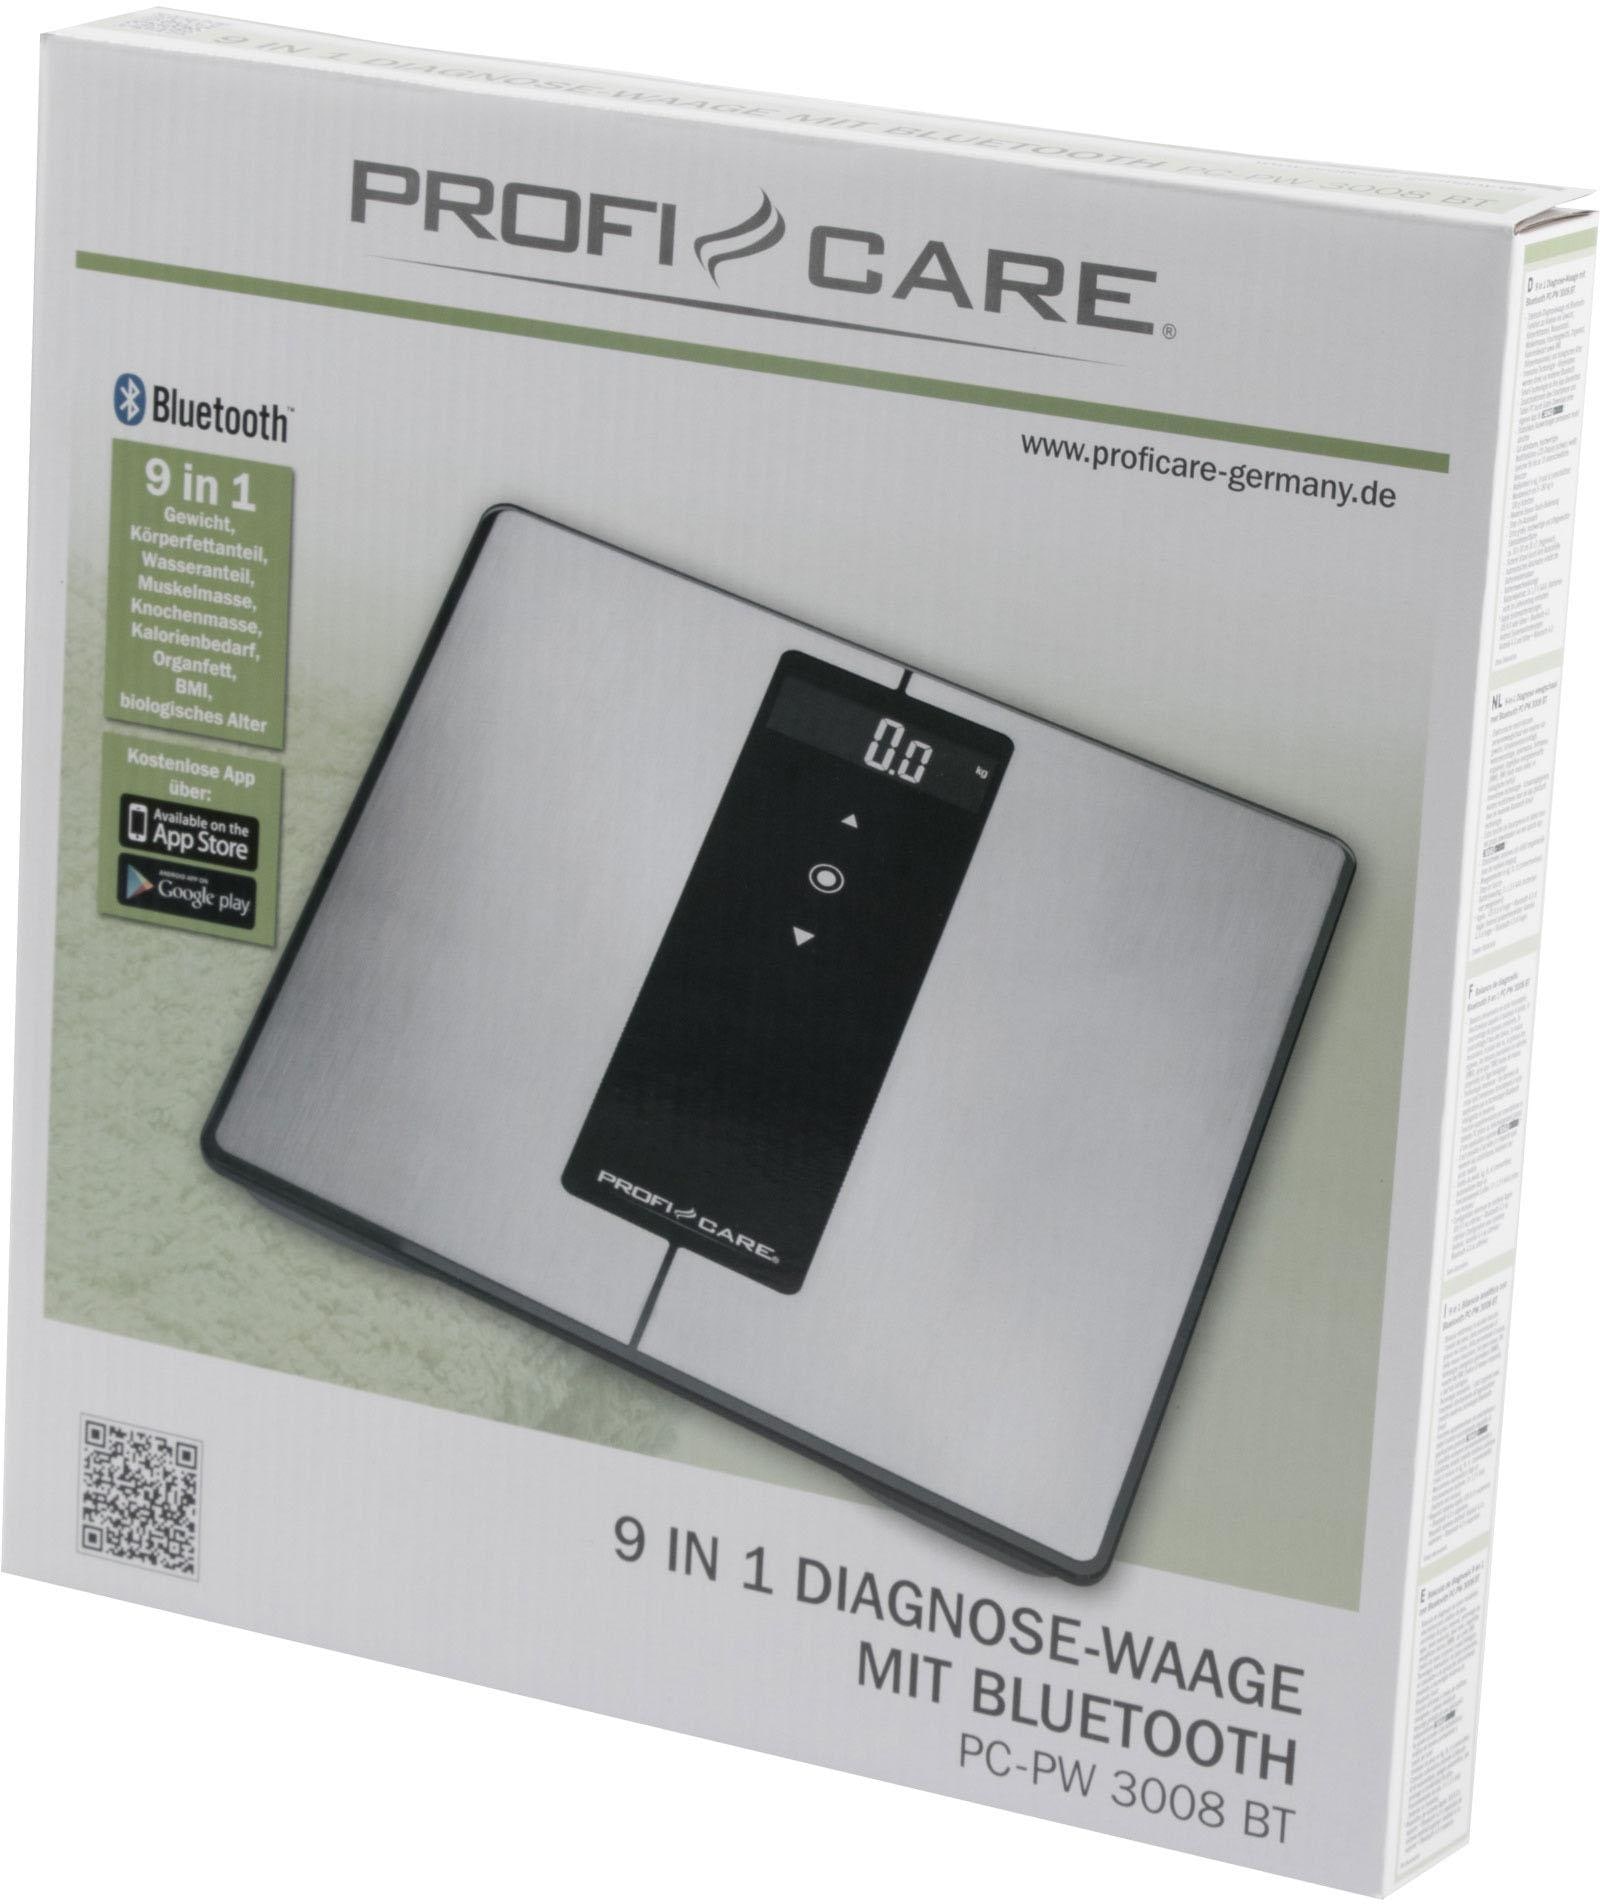 ProfiCare Körper-Analyse-Waage »PC-PW 3008 BT«, 9 in 1 mit Bluetooth